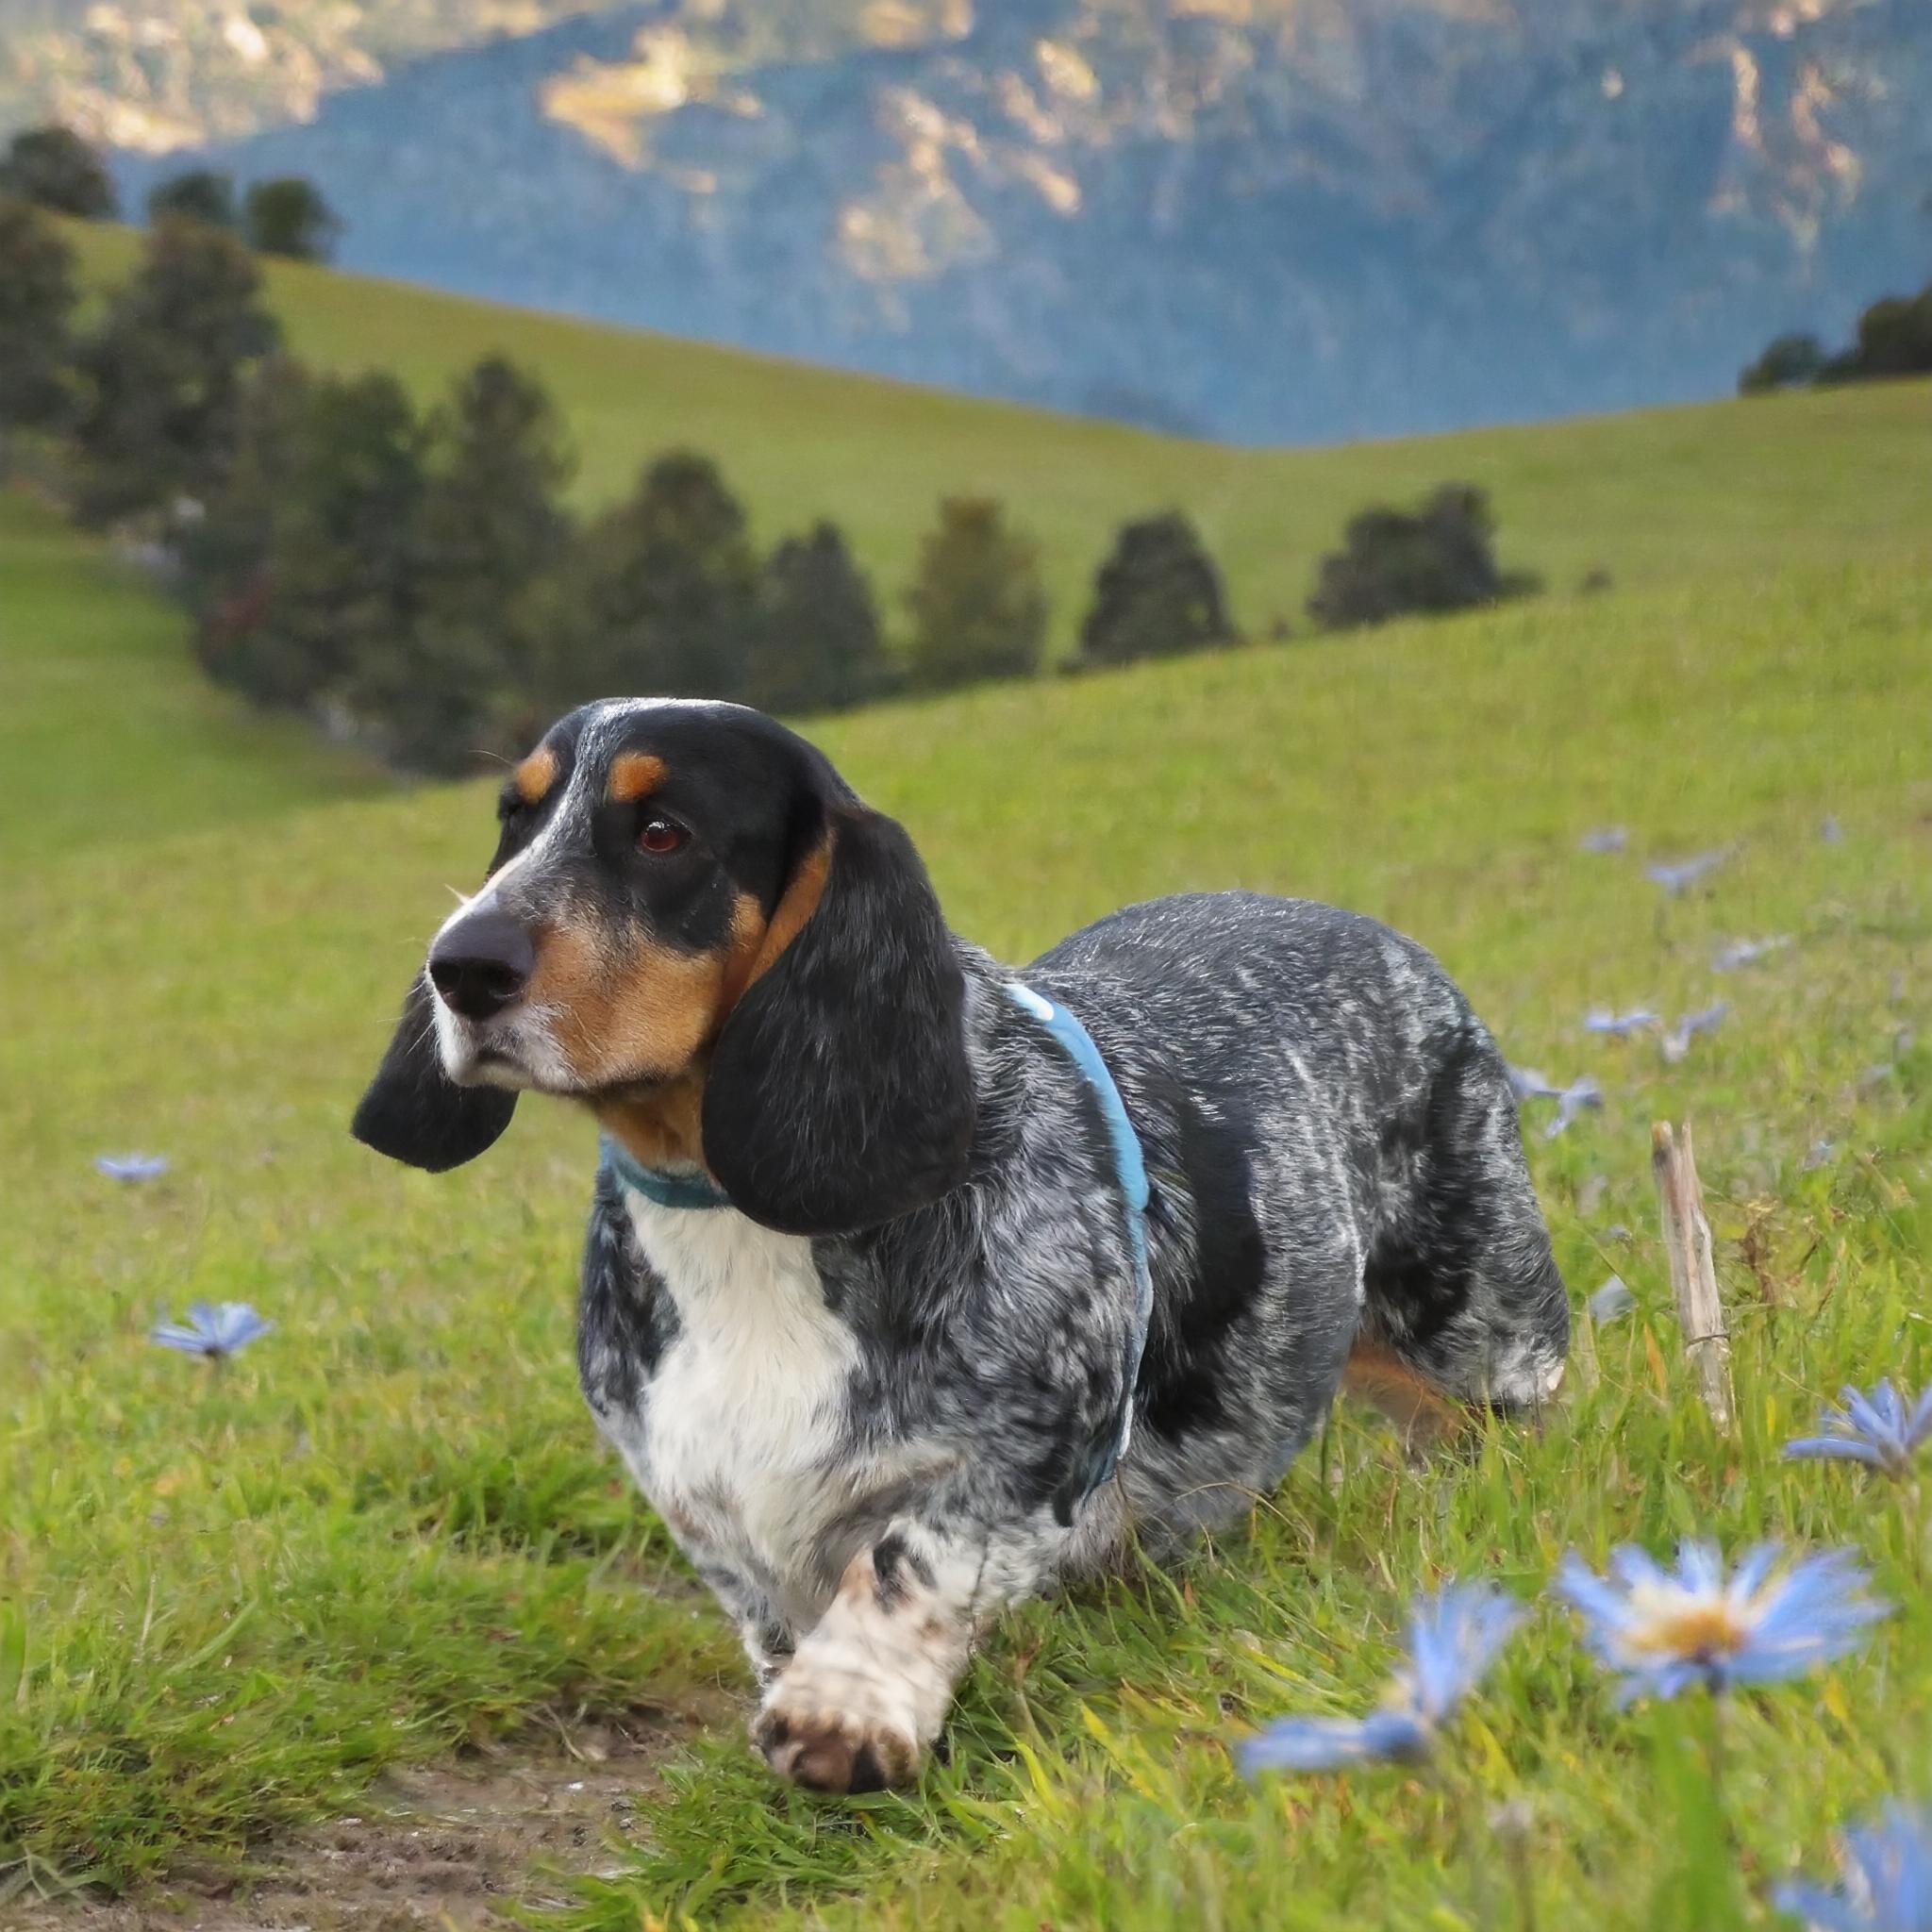 The Basset Bleu de Gascogne enjoying his daily walk through the open nature